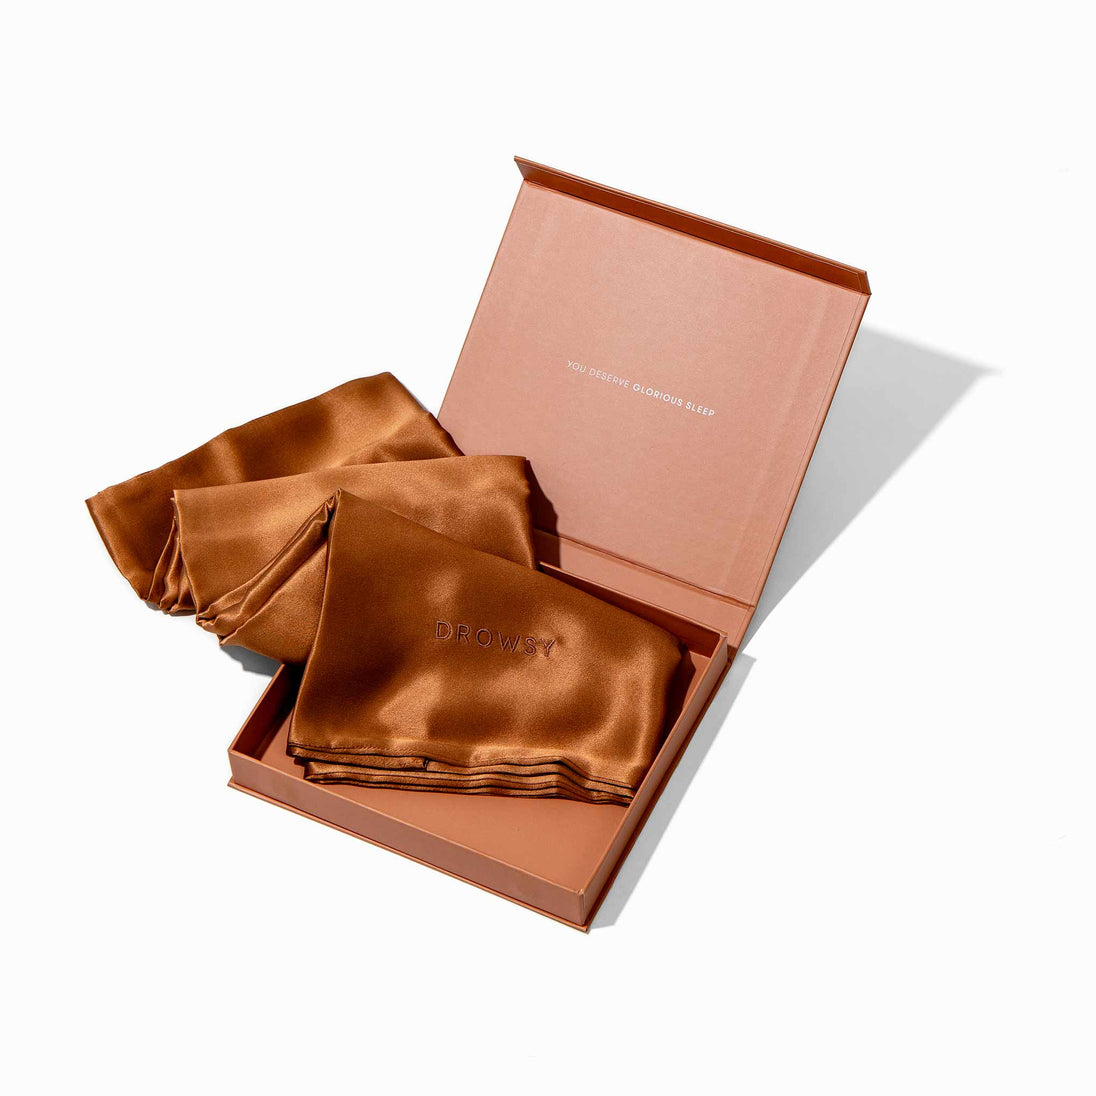 Terracotta pillowcase box opening with terracotta silk pillowcase inside